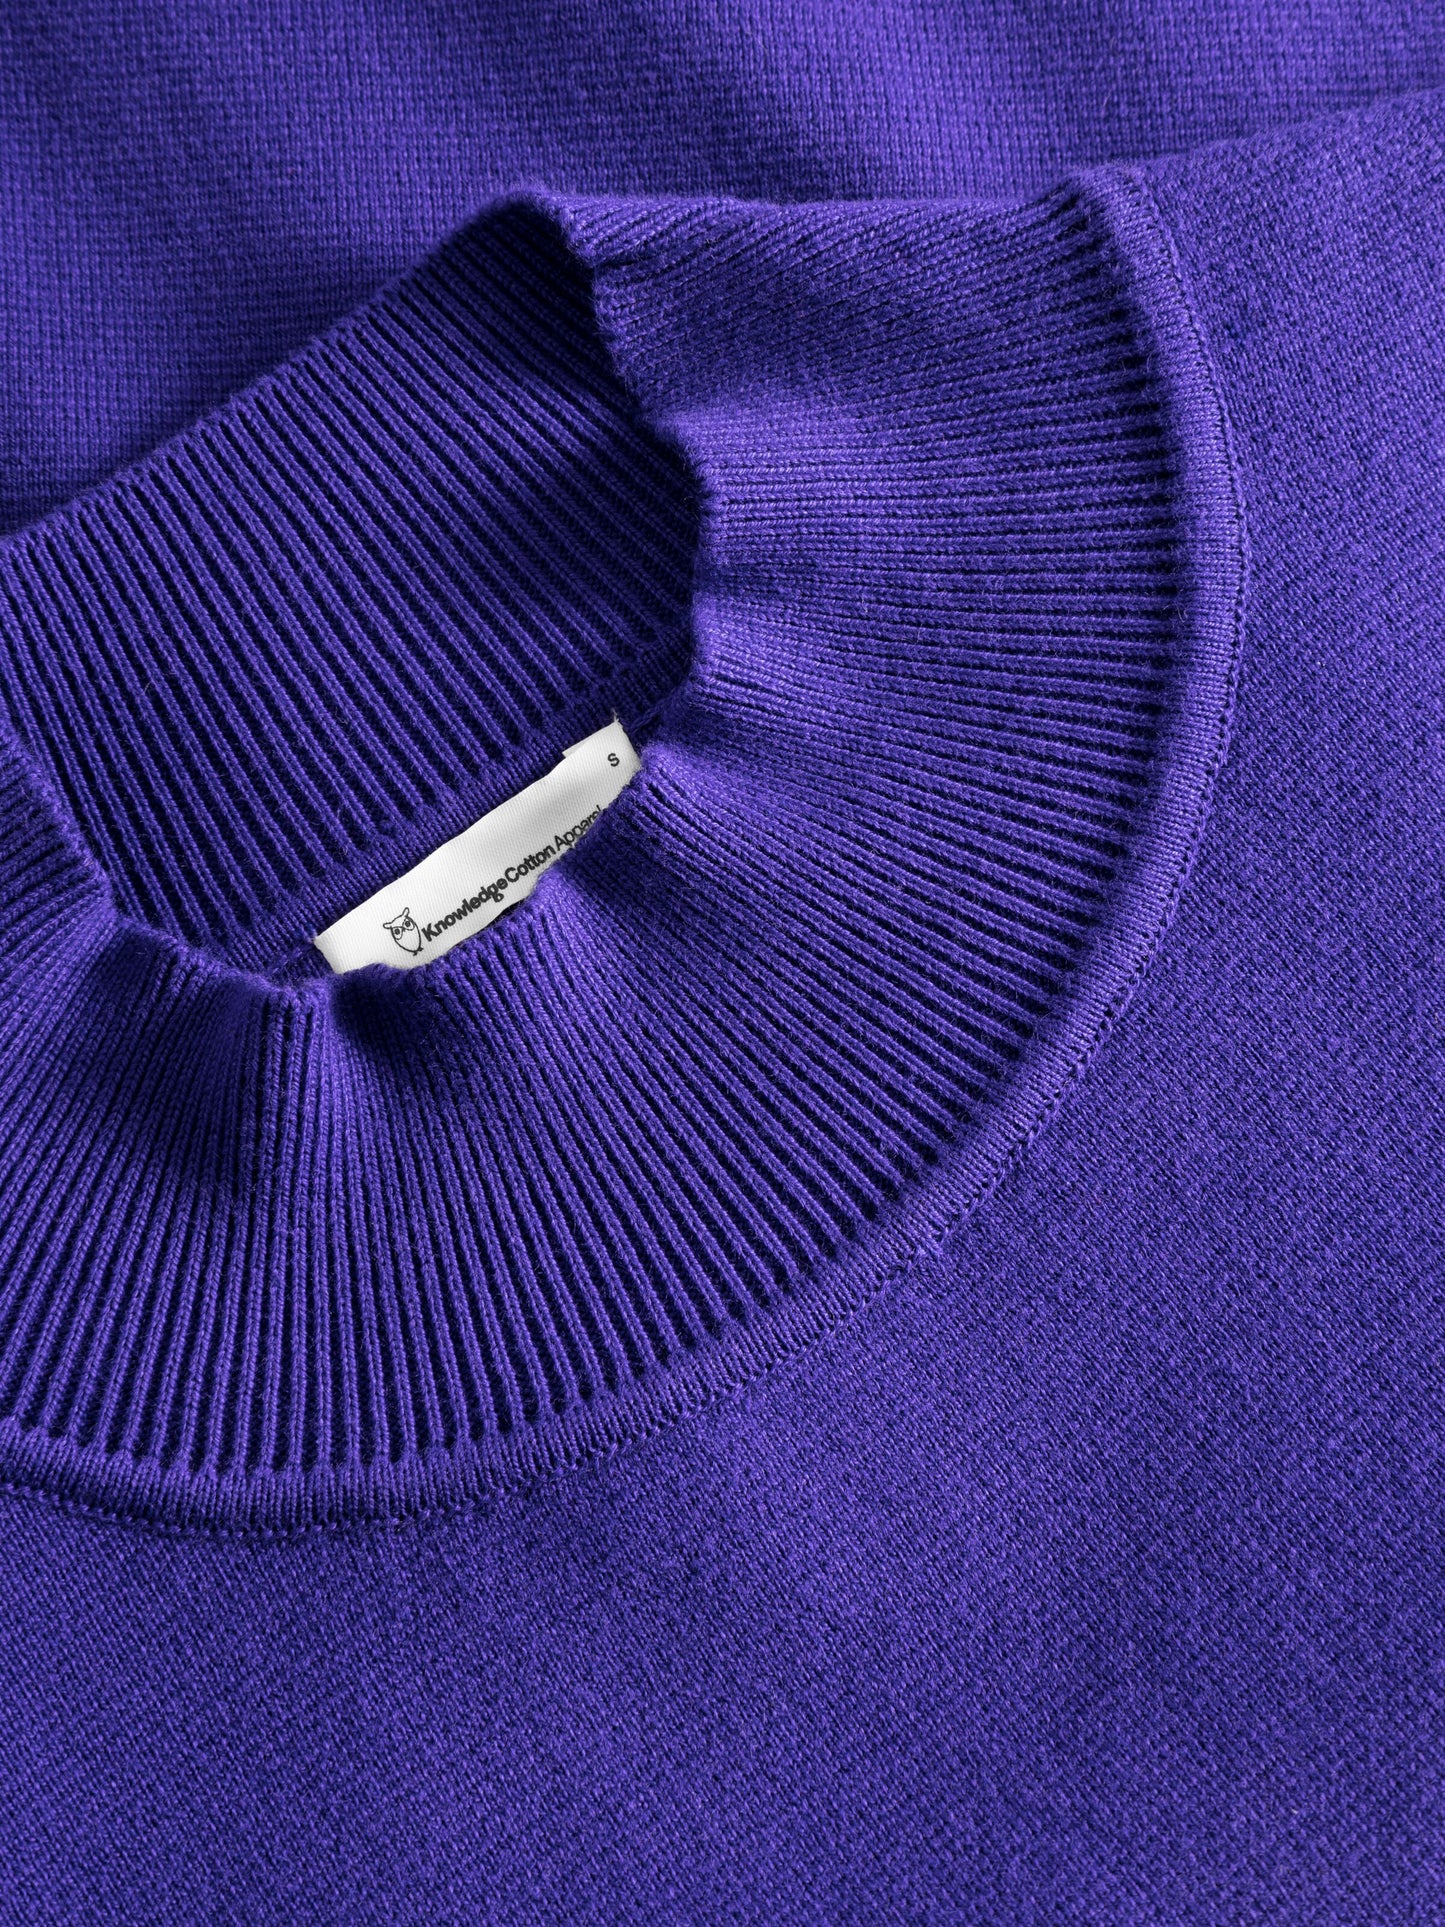 Pullover  Cotton high neck knit - deep purple - KnowledgeCotton Apparel